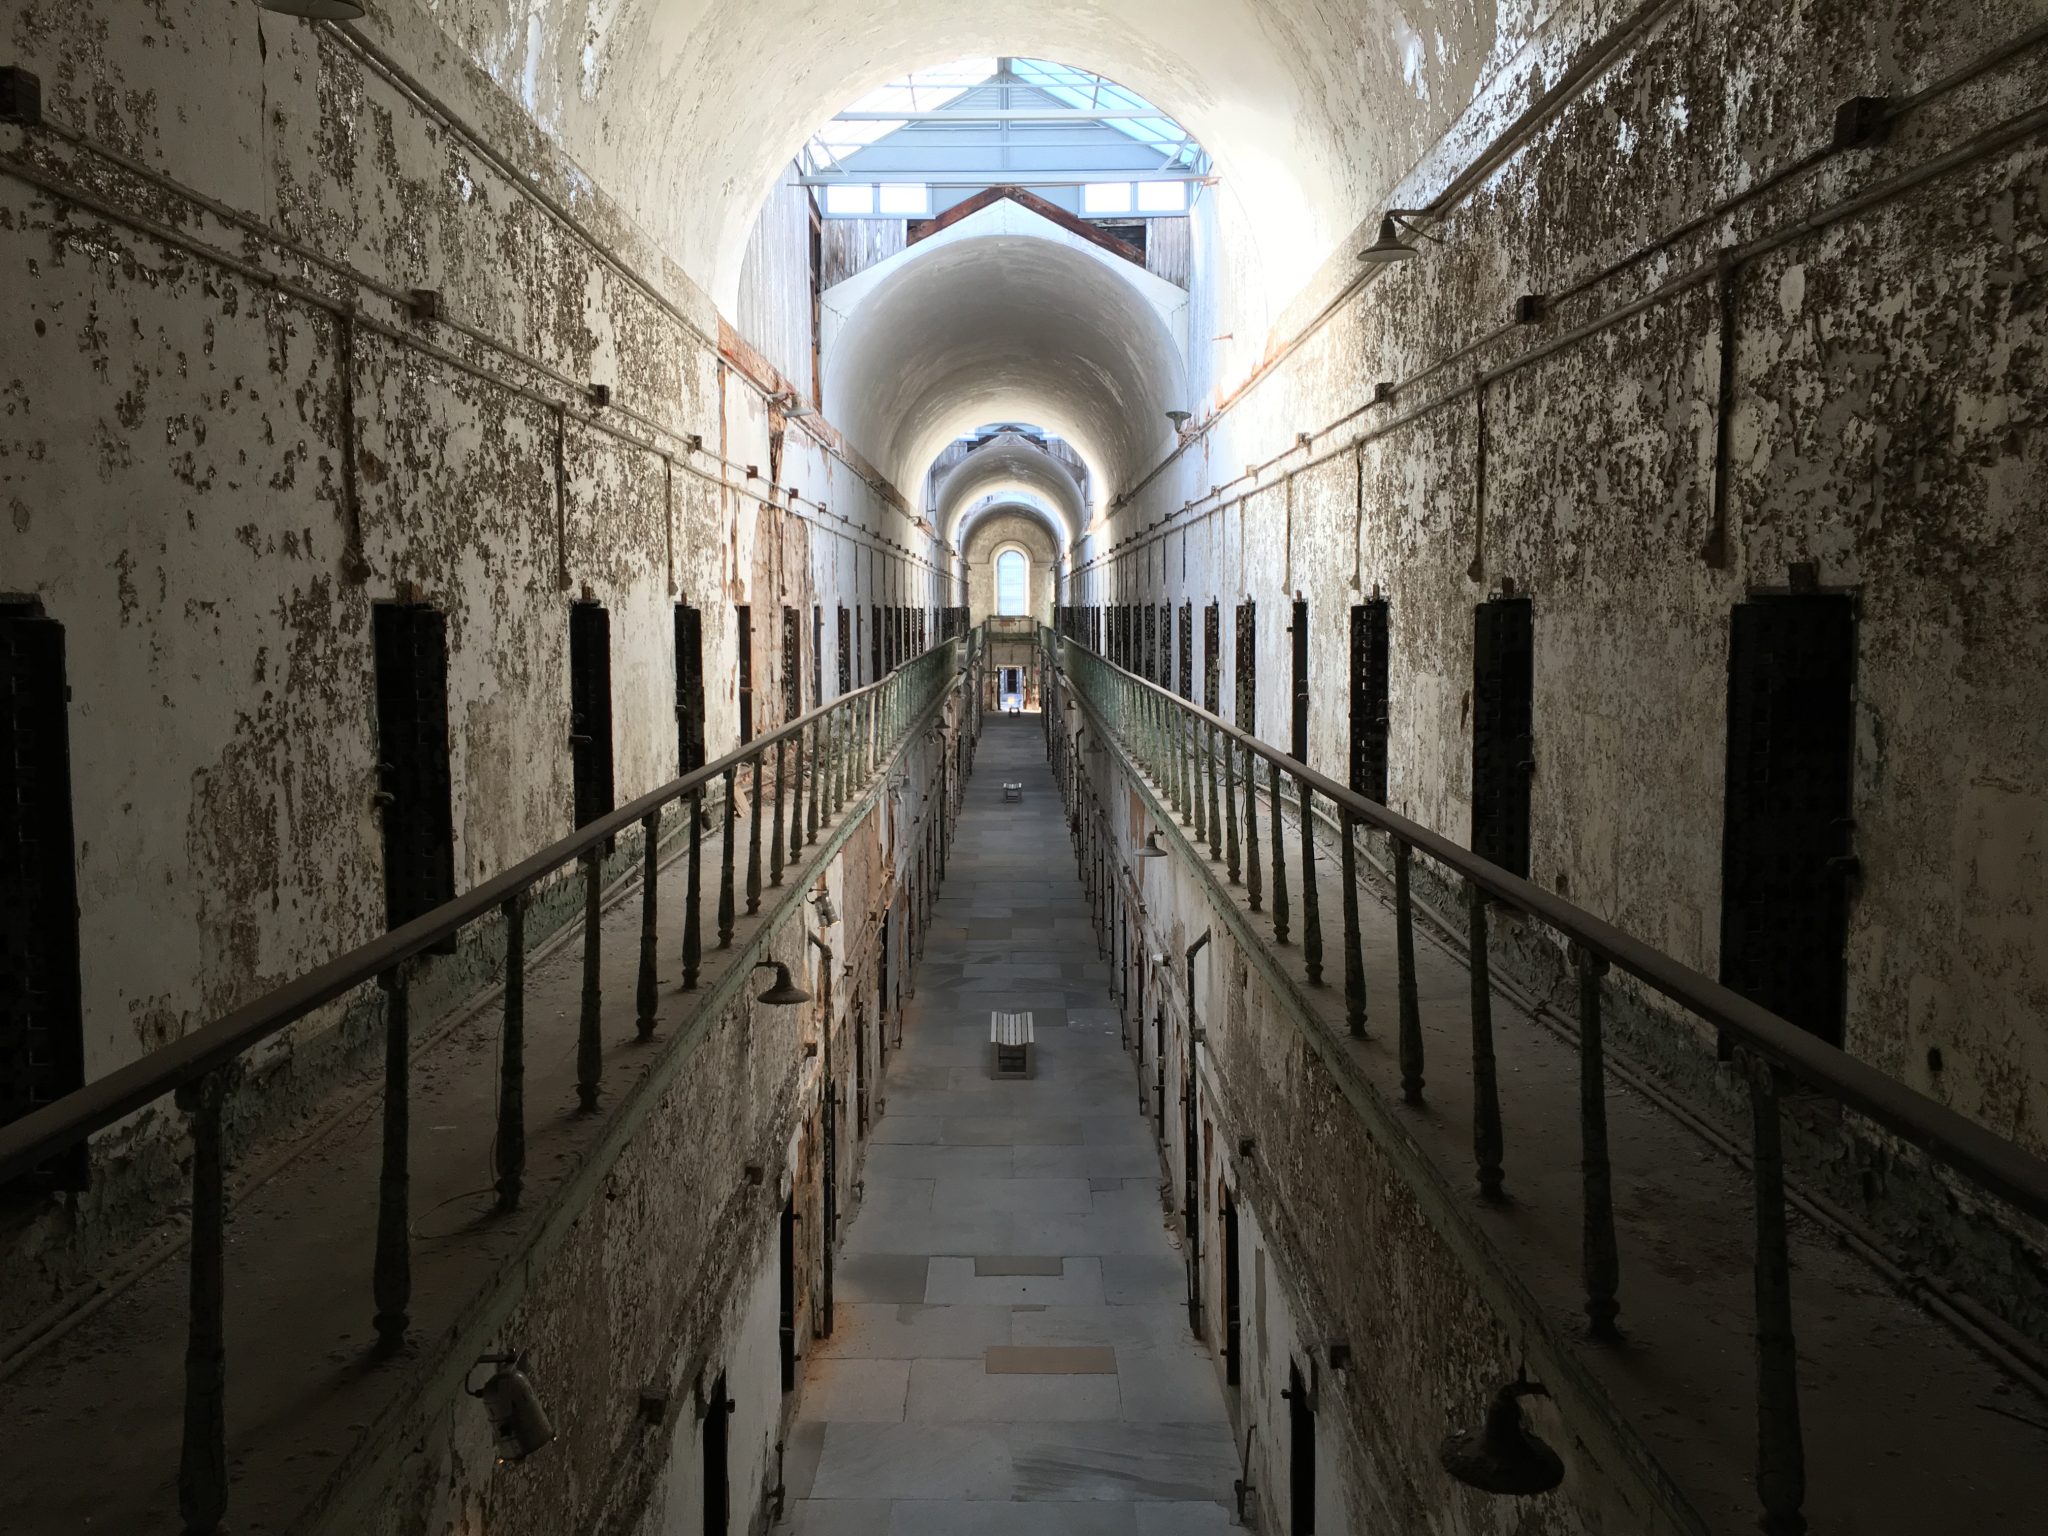 Historical Eastern State Penitentiary in Philadelphia